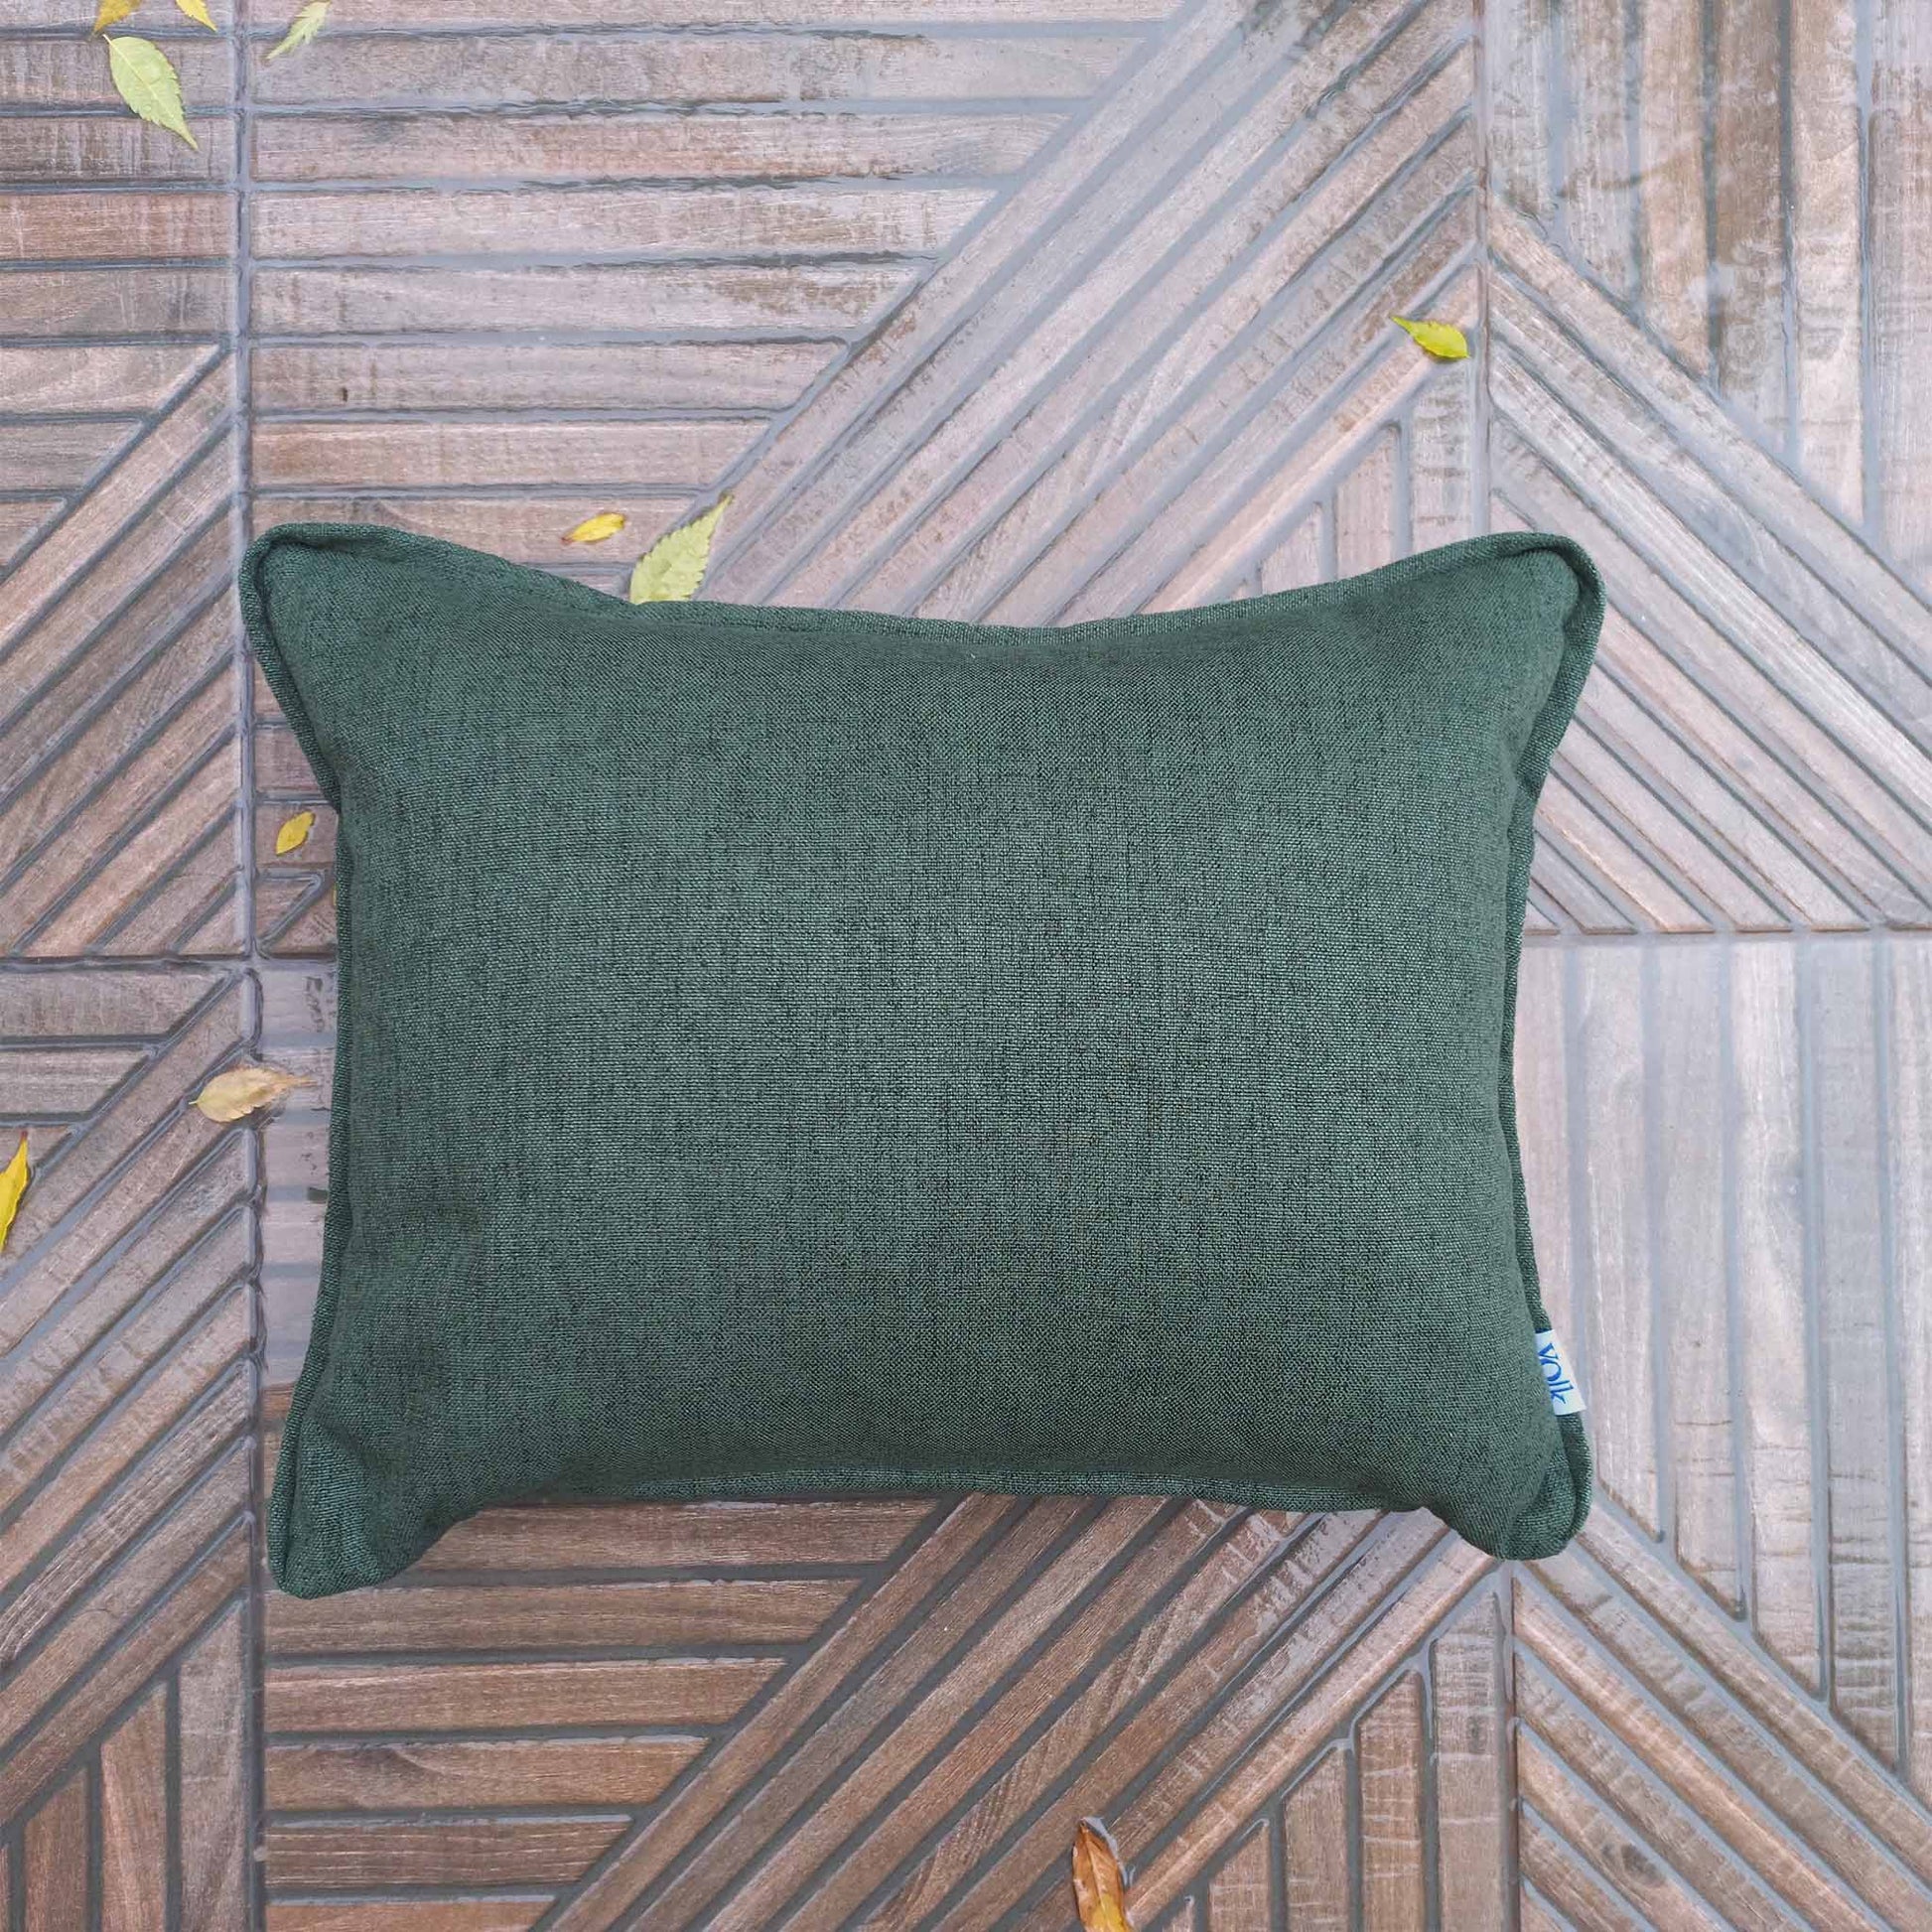 Dark green rectangular decorative cushion on a rainy balcony